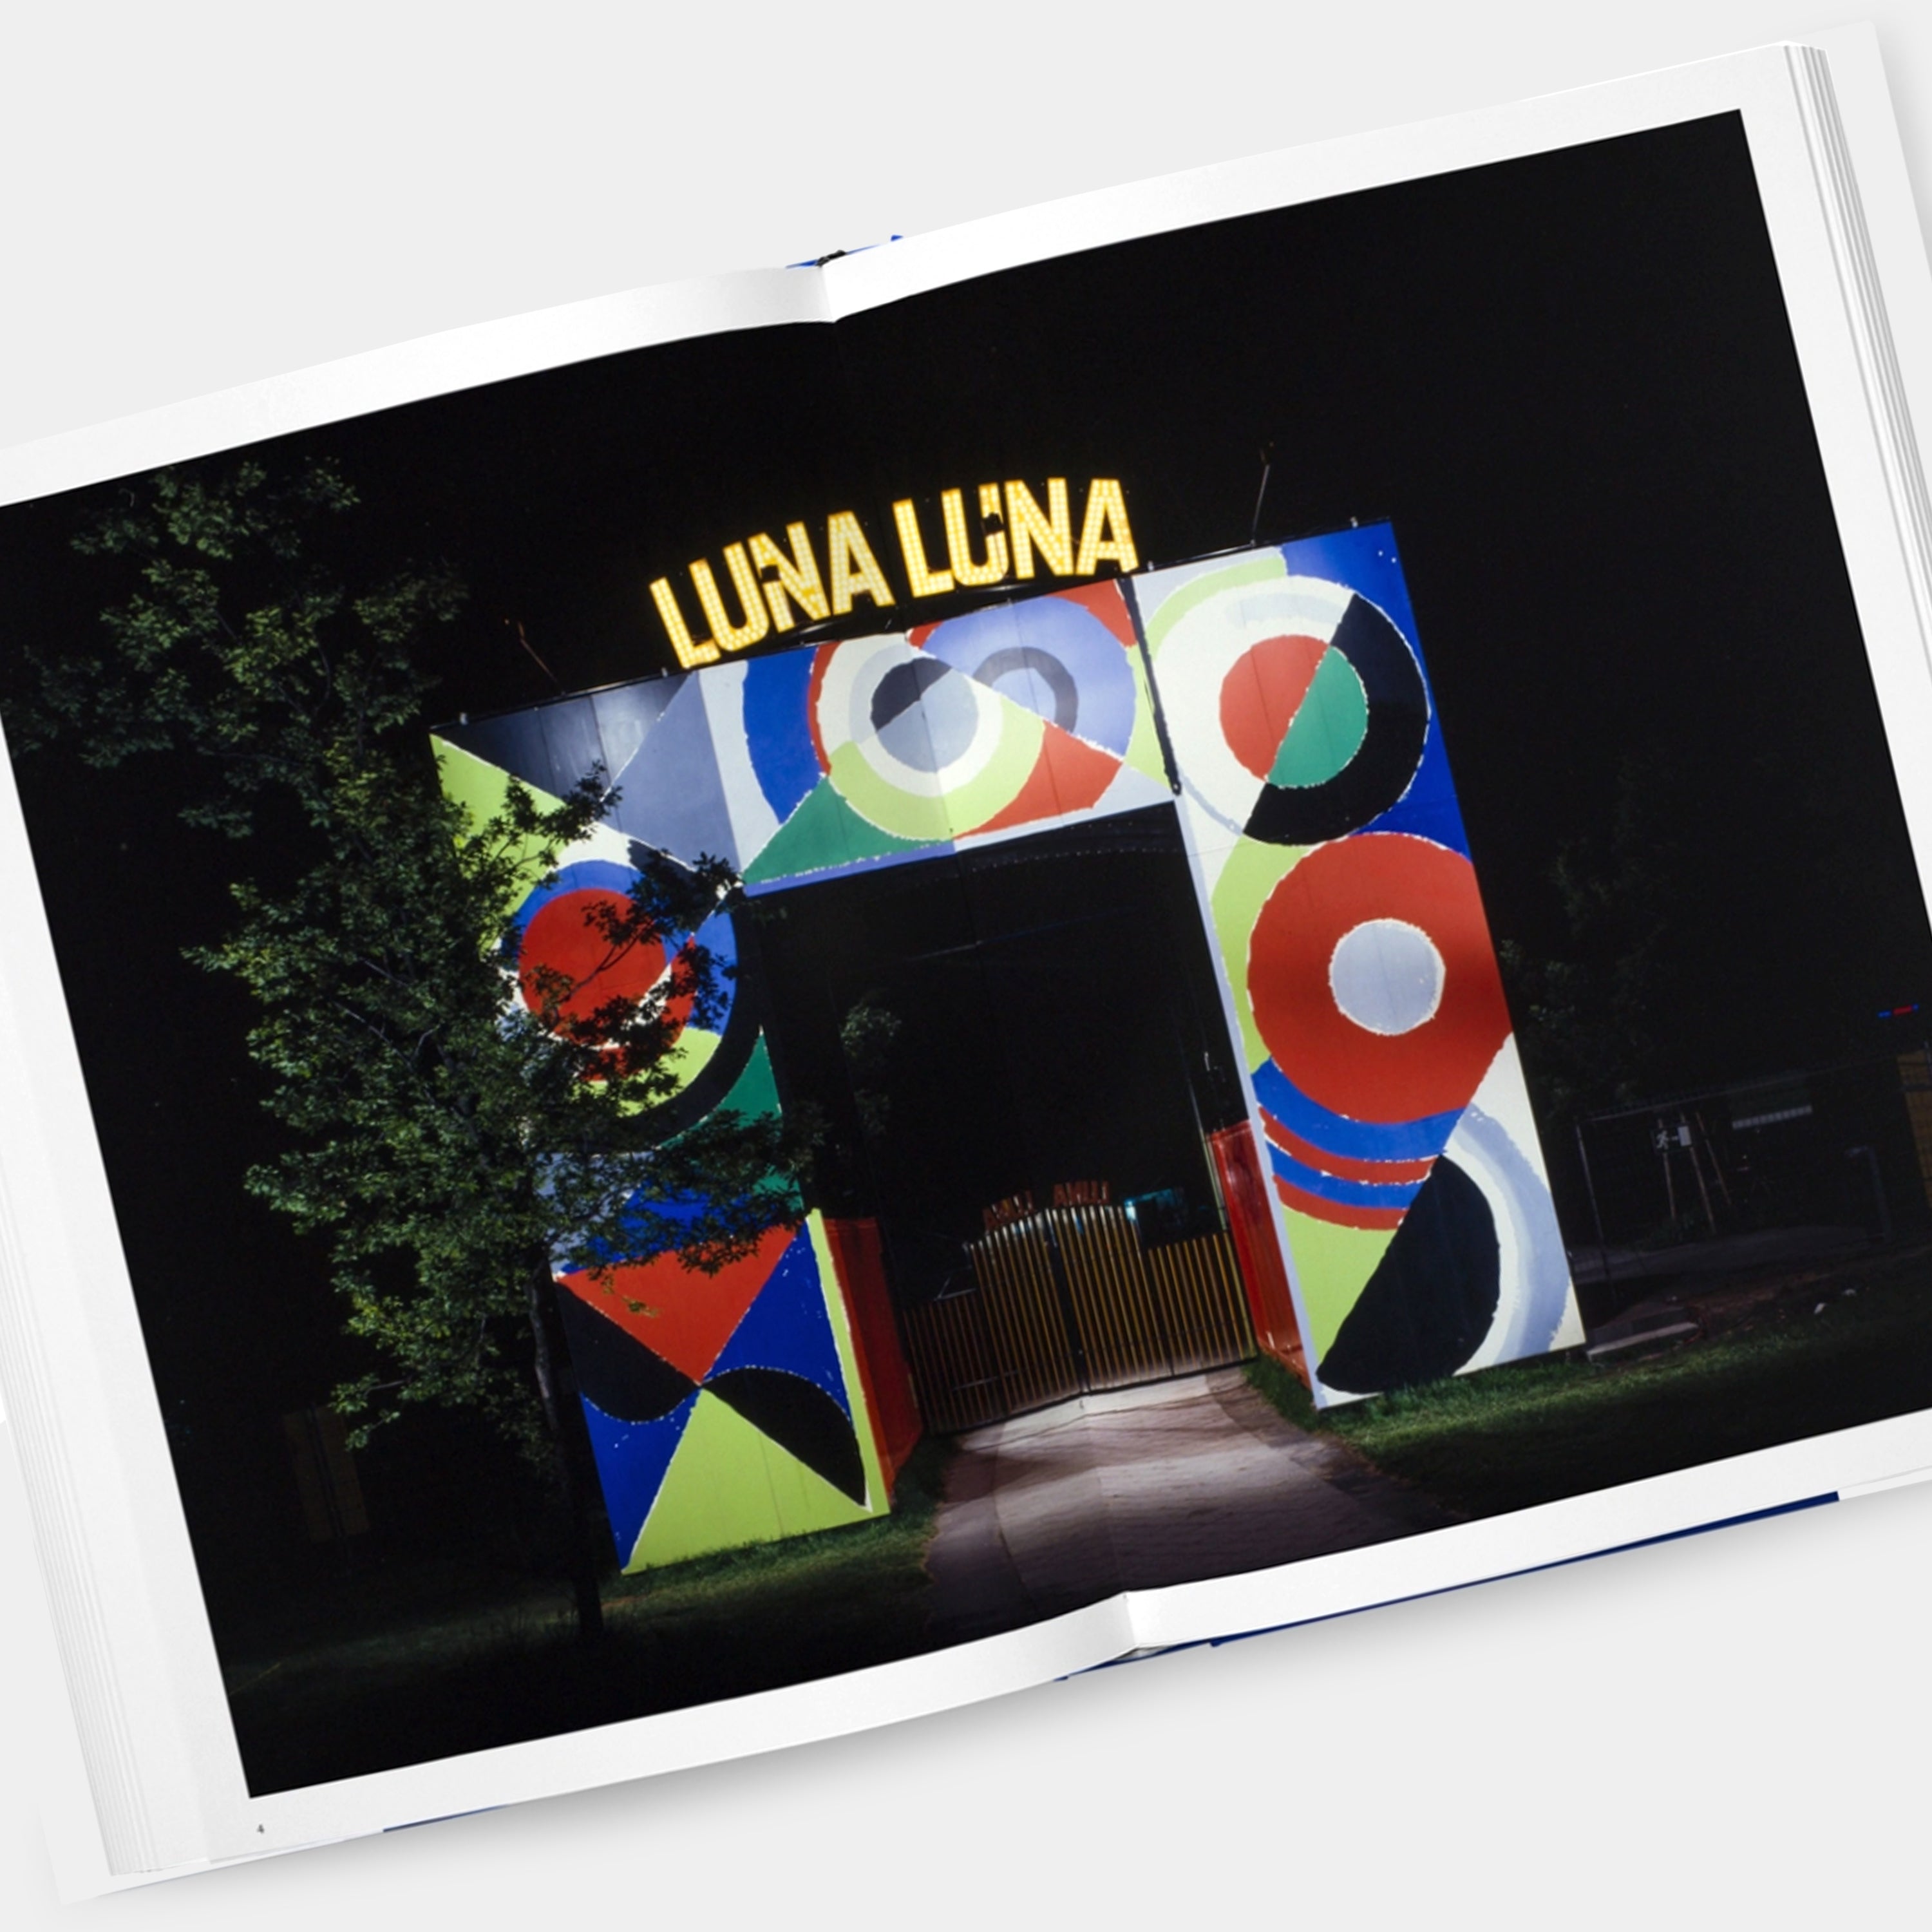 Luna Luna: The Art Amusement Park Phaidon Book